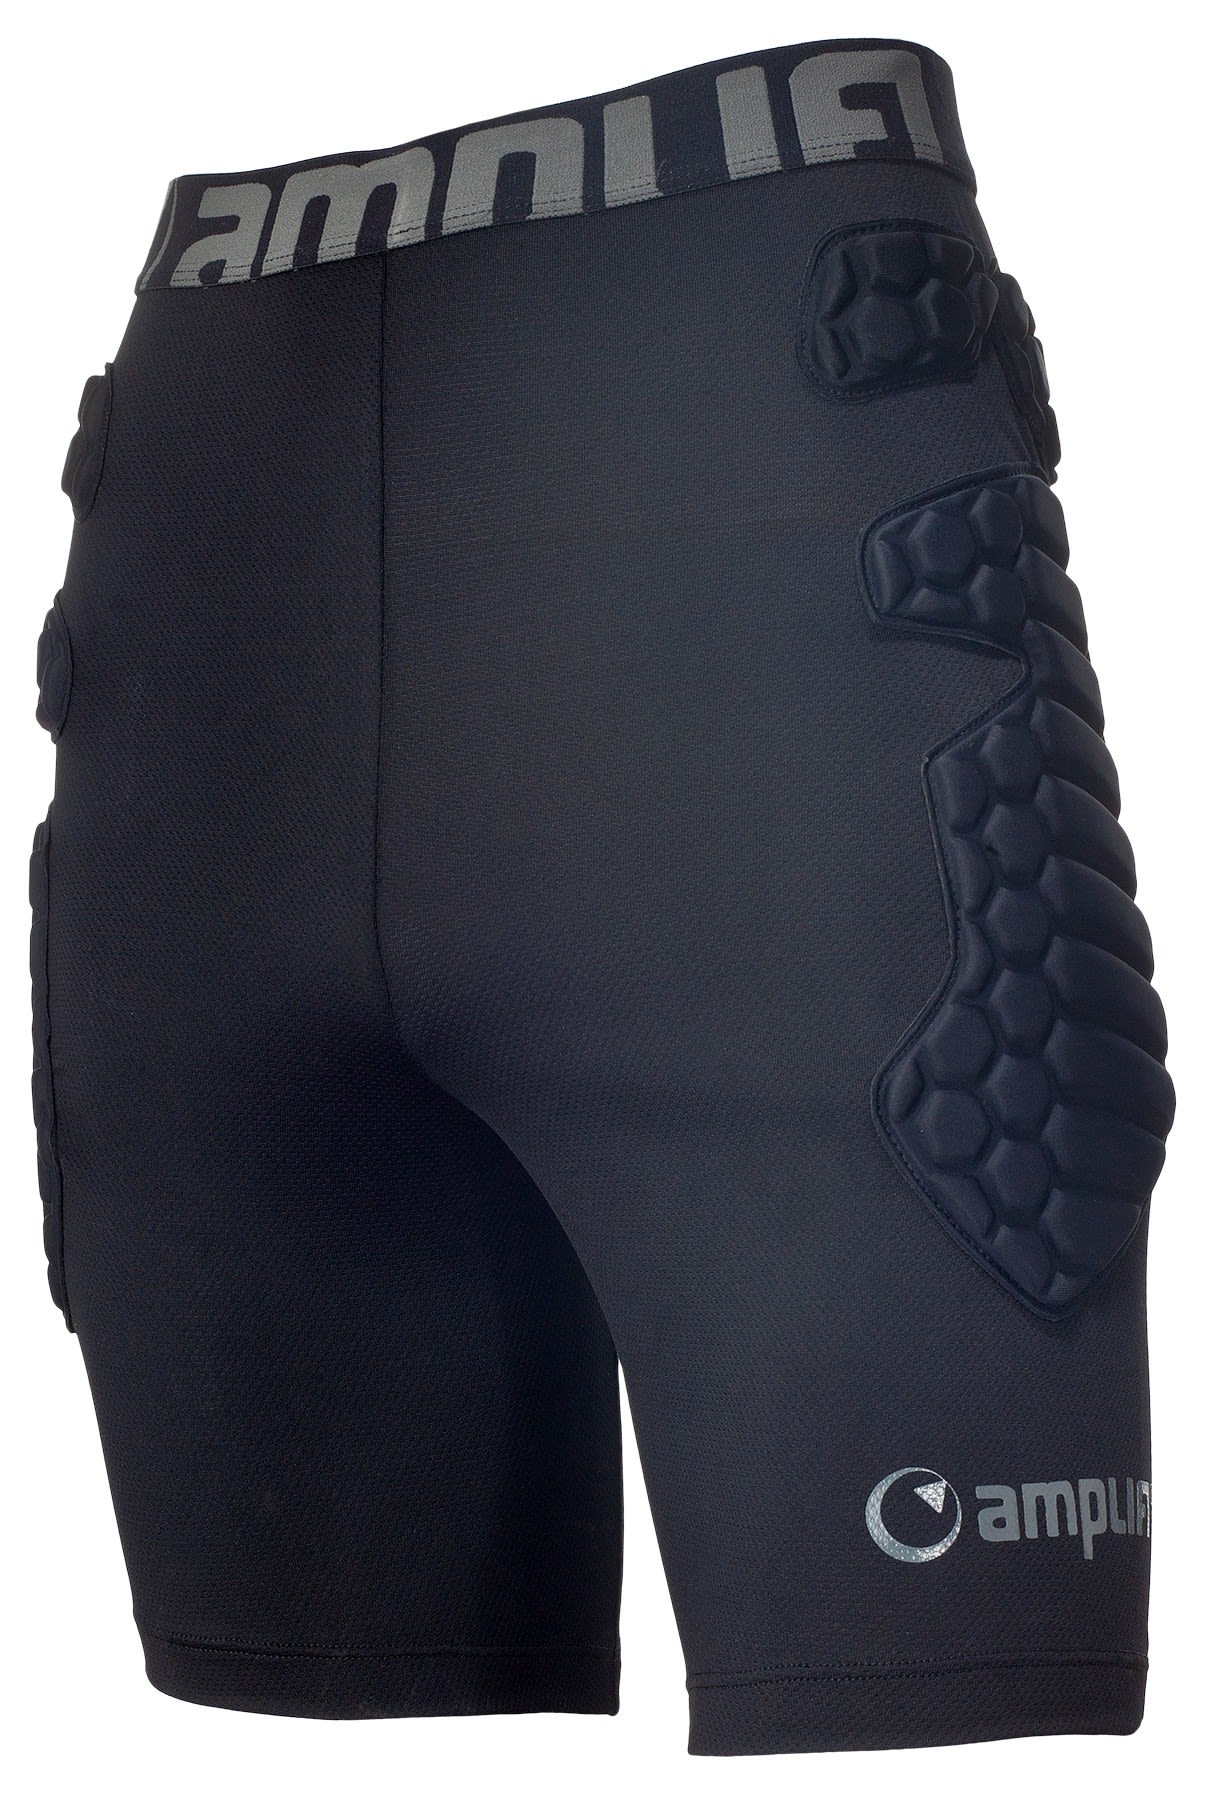 Amplifi Salvo Pants Schwarz- Protektorenhosen- Grsse XXS - Farbe Black unter Amplifi